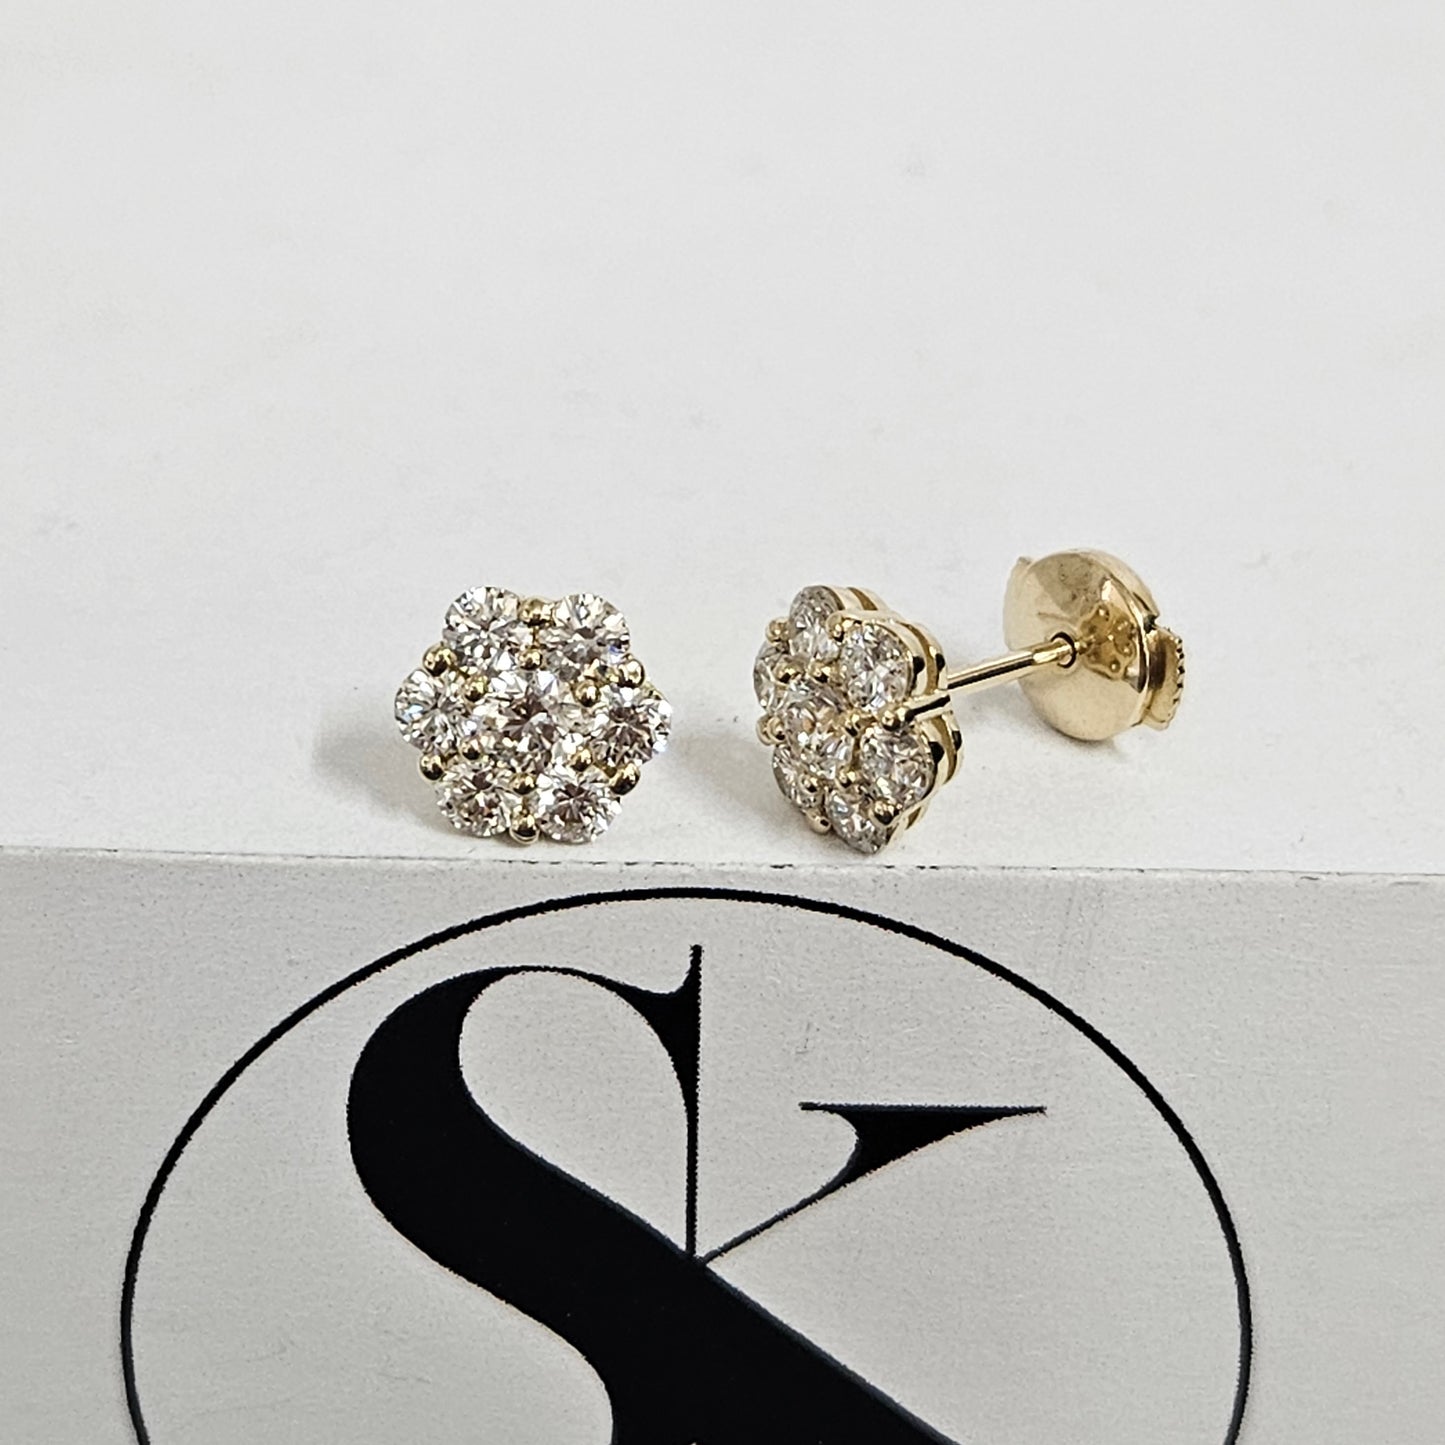 1.1ct Diamond Cluster Earrings/Natural Diamond  European lock closure Earrings / 14K ,18K gold Halo 8.2mm Stud Earrings/Anniversary gift